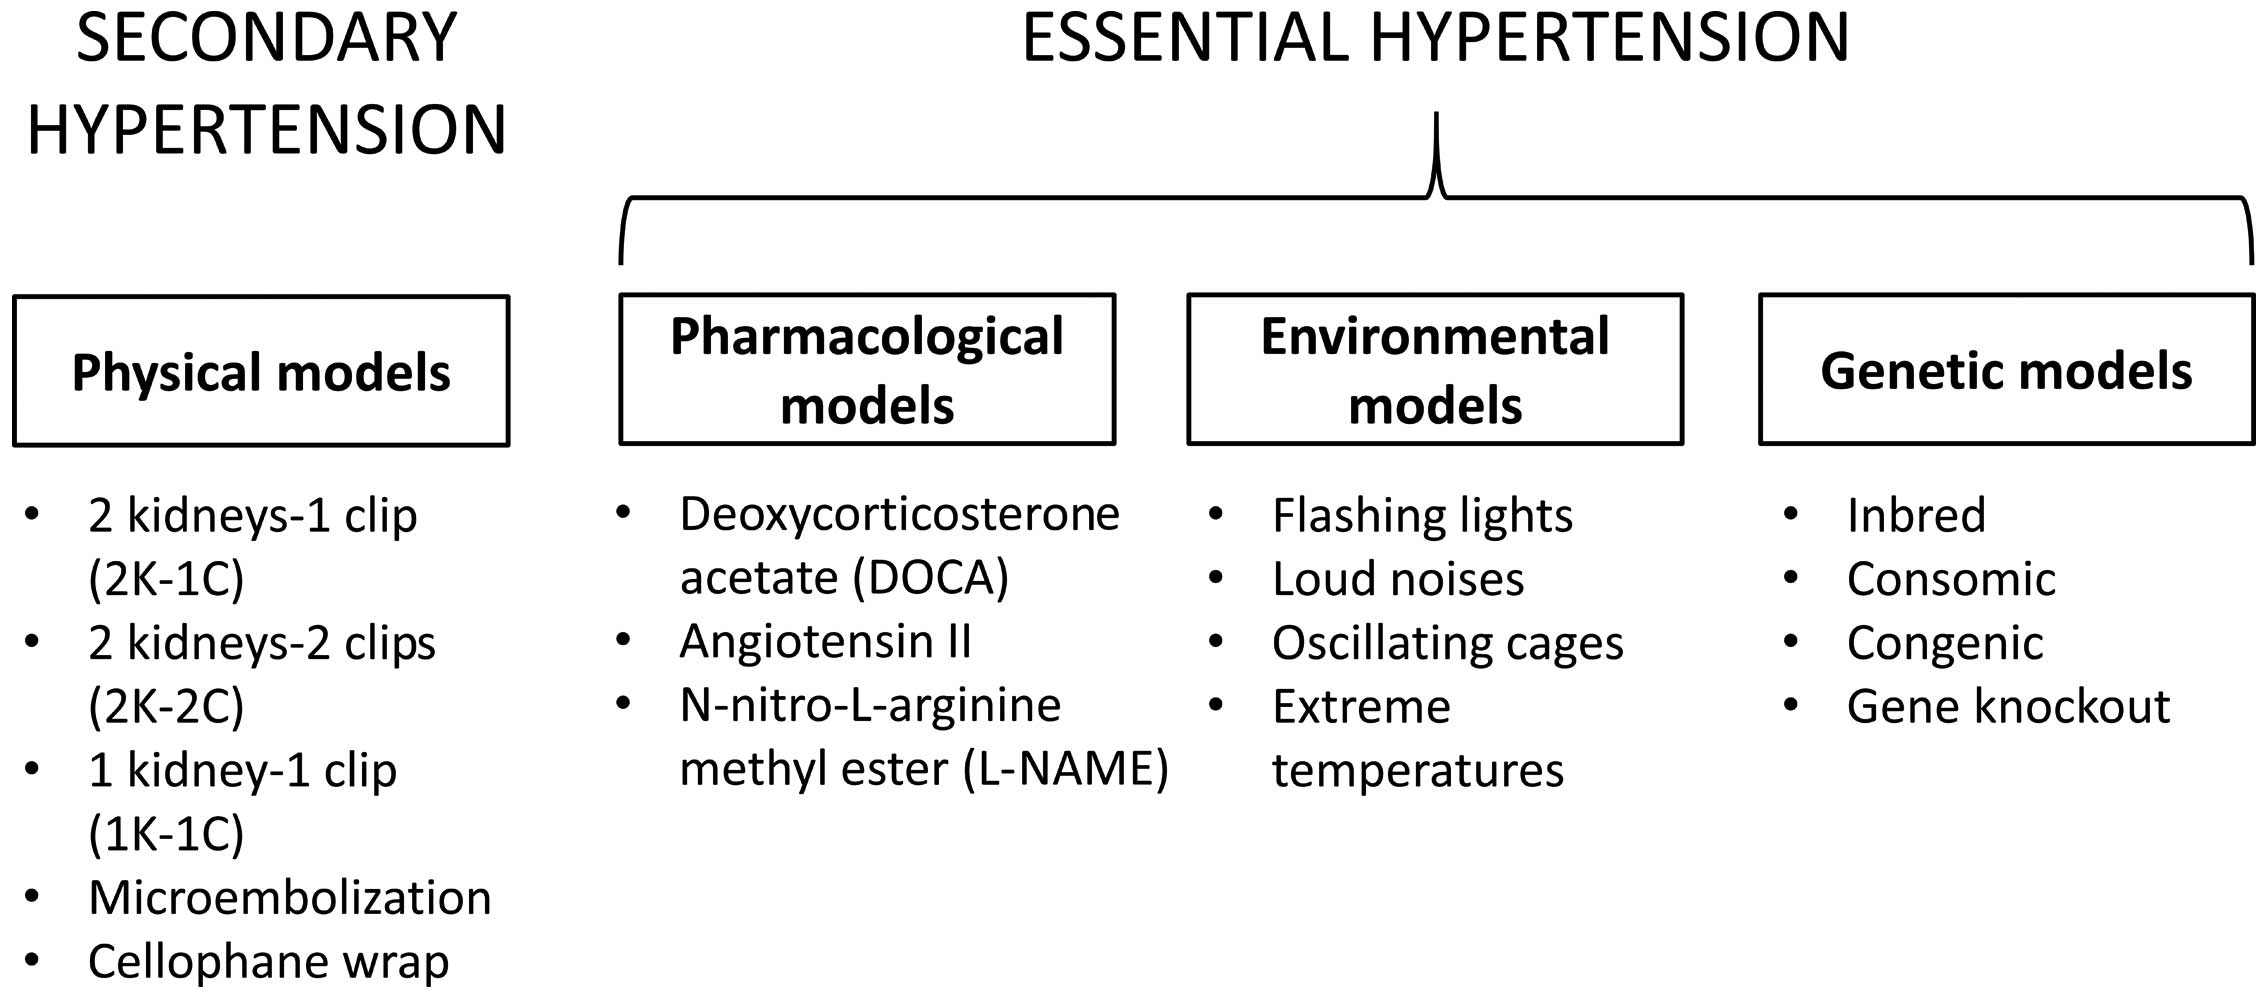 VIII.1. Types of hypertension